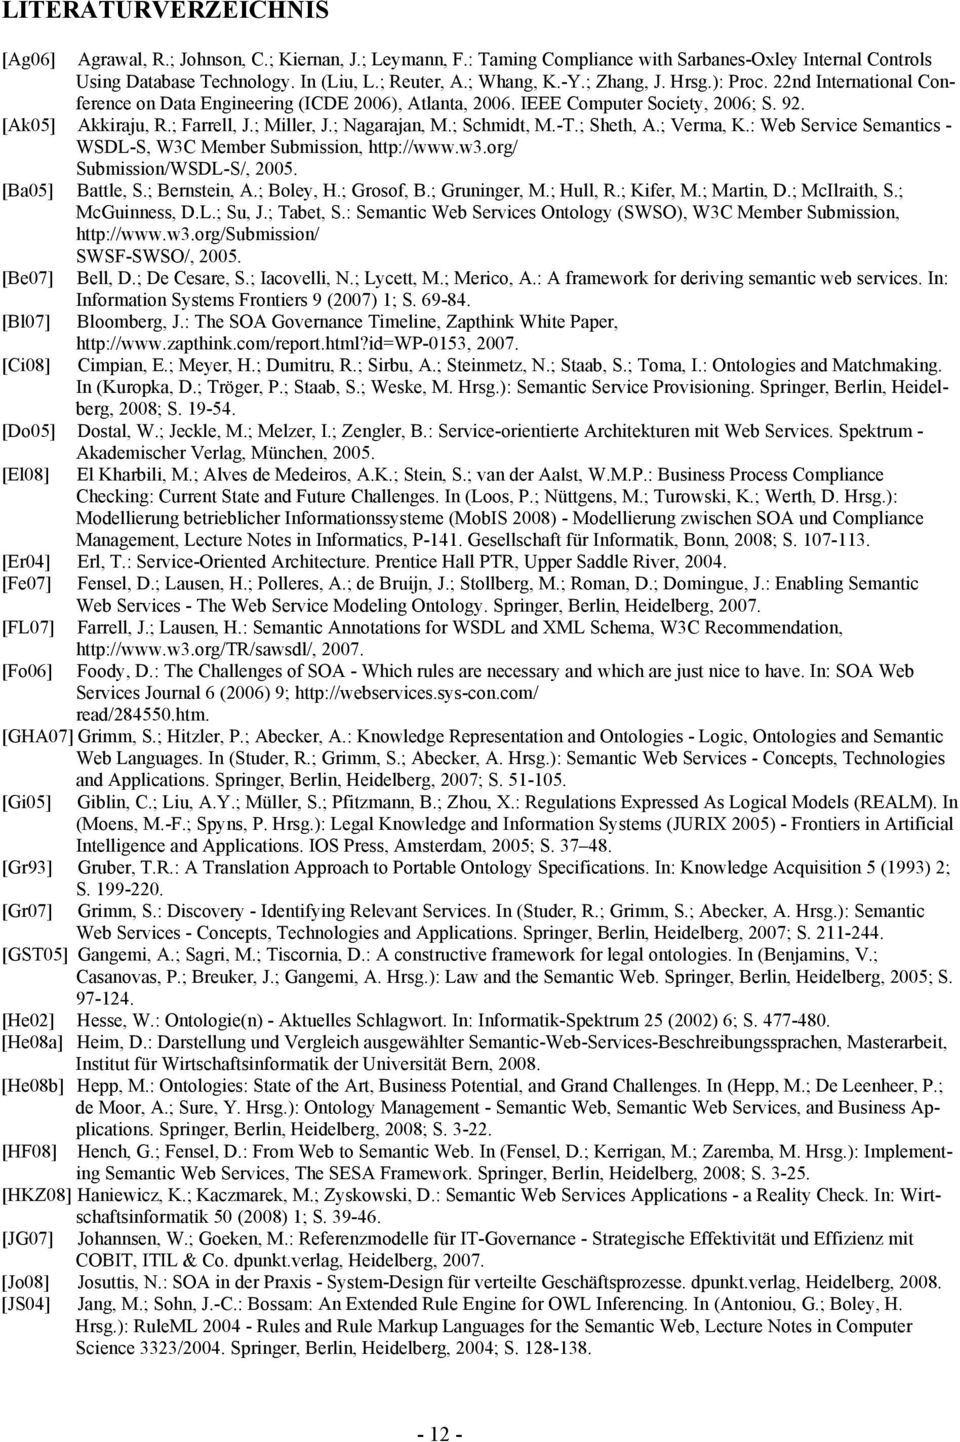 ; Schmidt, M.-T.; Sheth, A.; Verma, K.: Web Service Semantics - WSDL-S, W3C Member Submission, http://www.w3.org/ Submission/WSDL-S/, 2005. [Ba05] Battle, S.; Bernstein, A.; Boley, H.; Grosof, B.